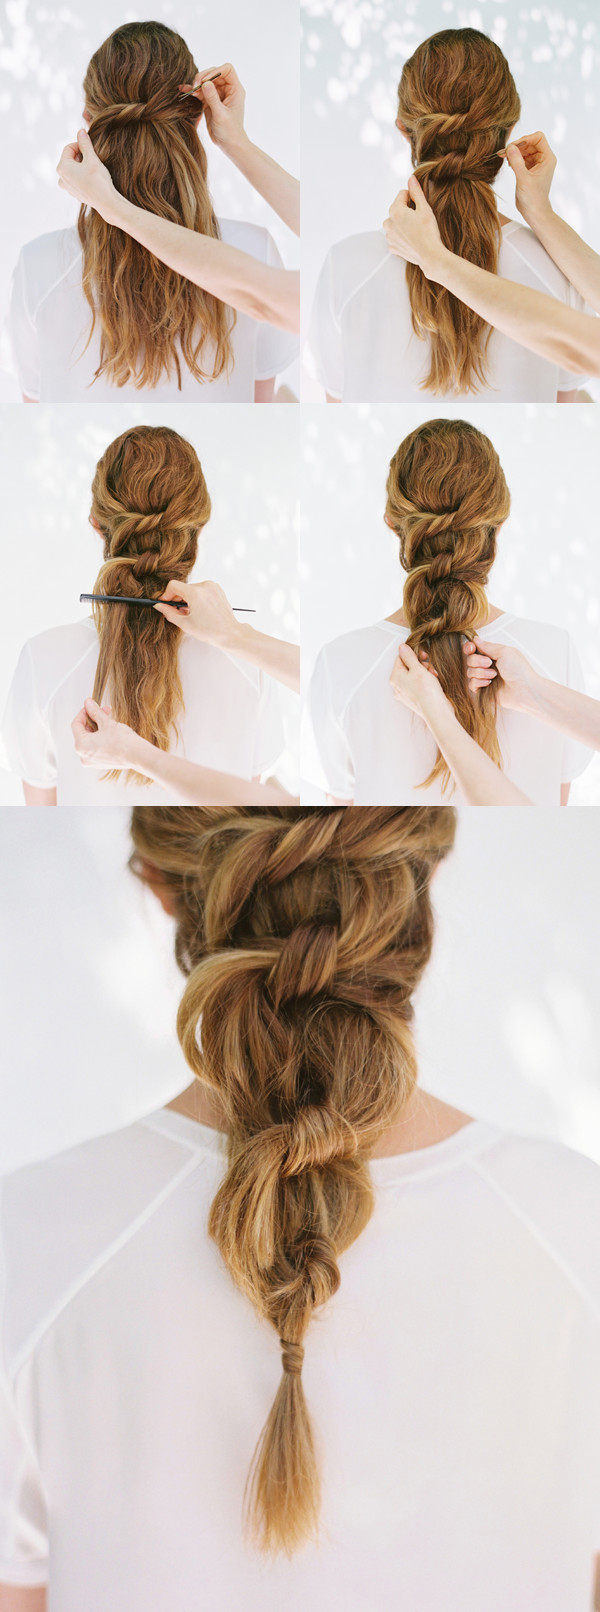 DIY Hairstyle For Wedding
 DIY Knot Ponytail DIY Weddings